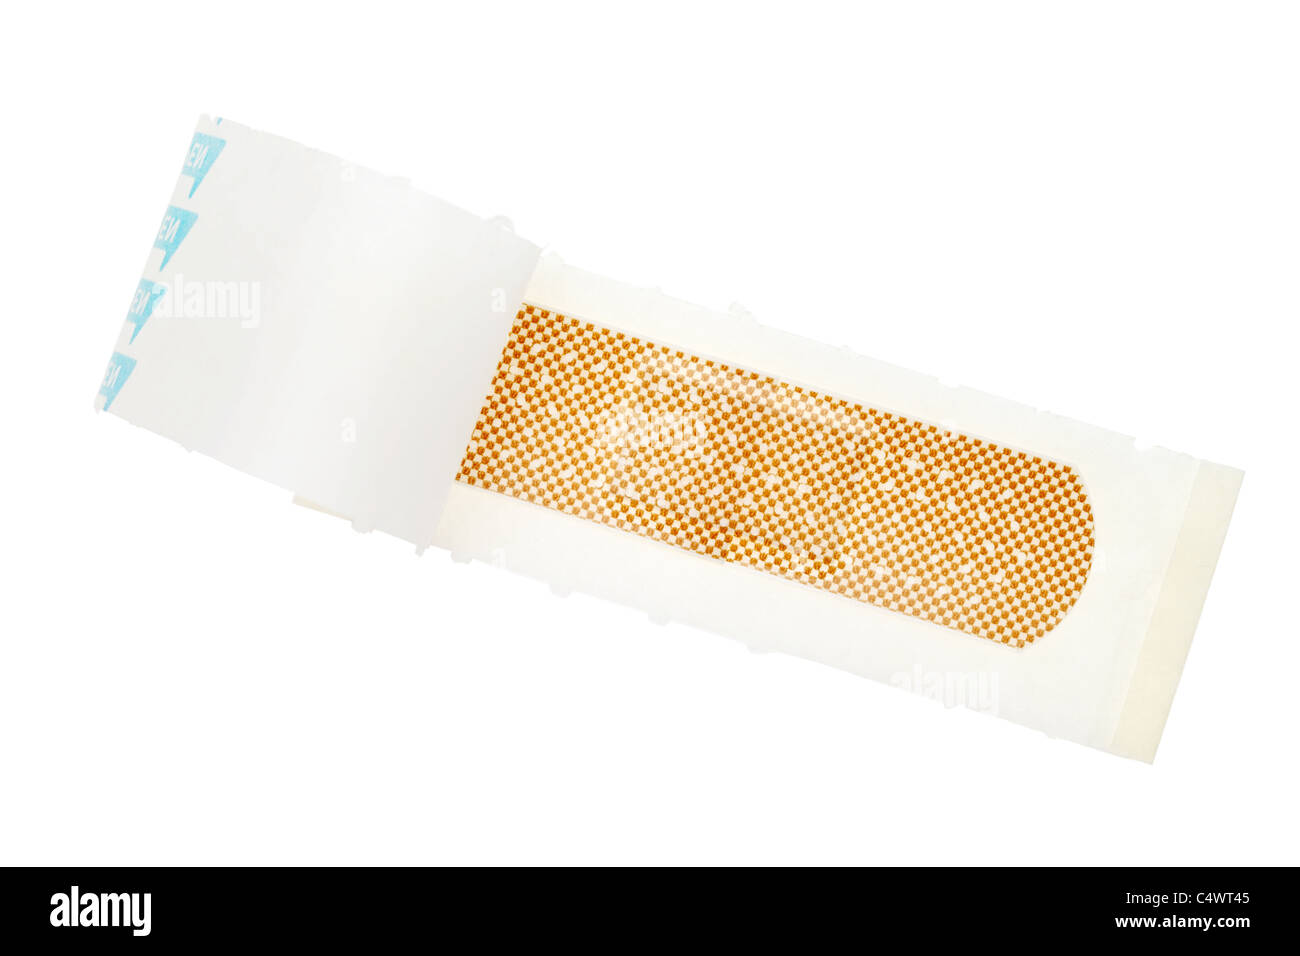 Band aid isolated on white background Stock Photo